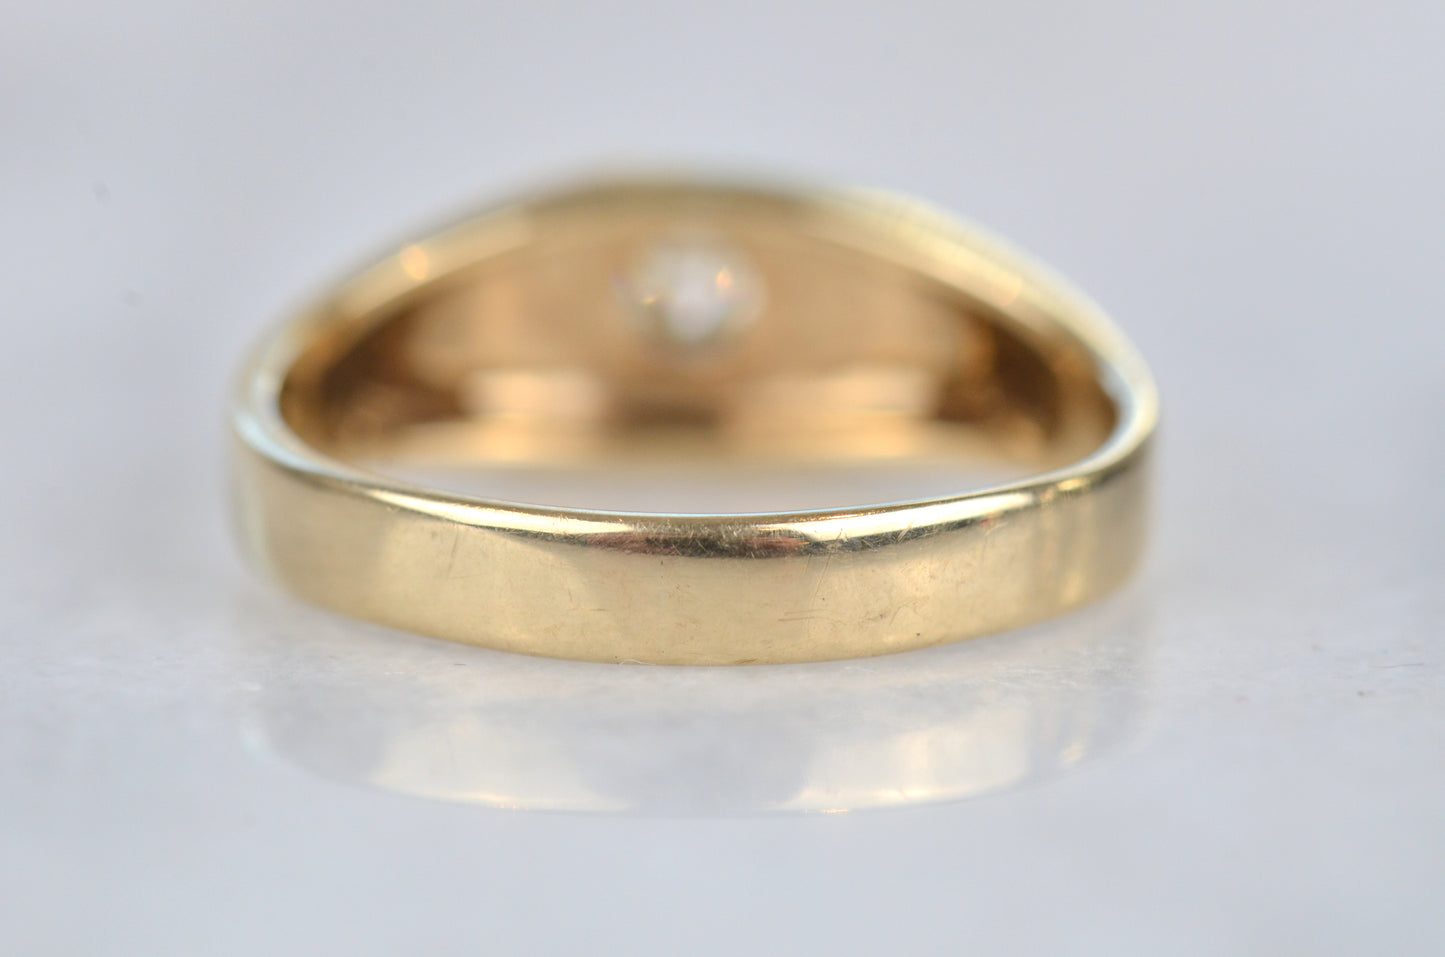 Victorian-Inspired Vintage Starburst Ring